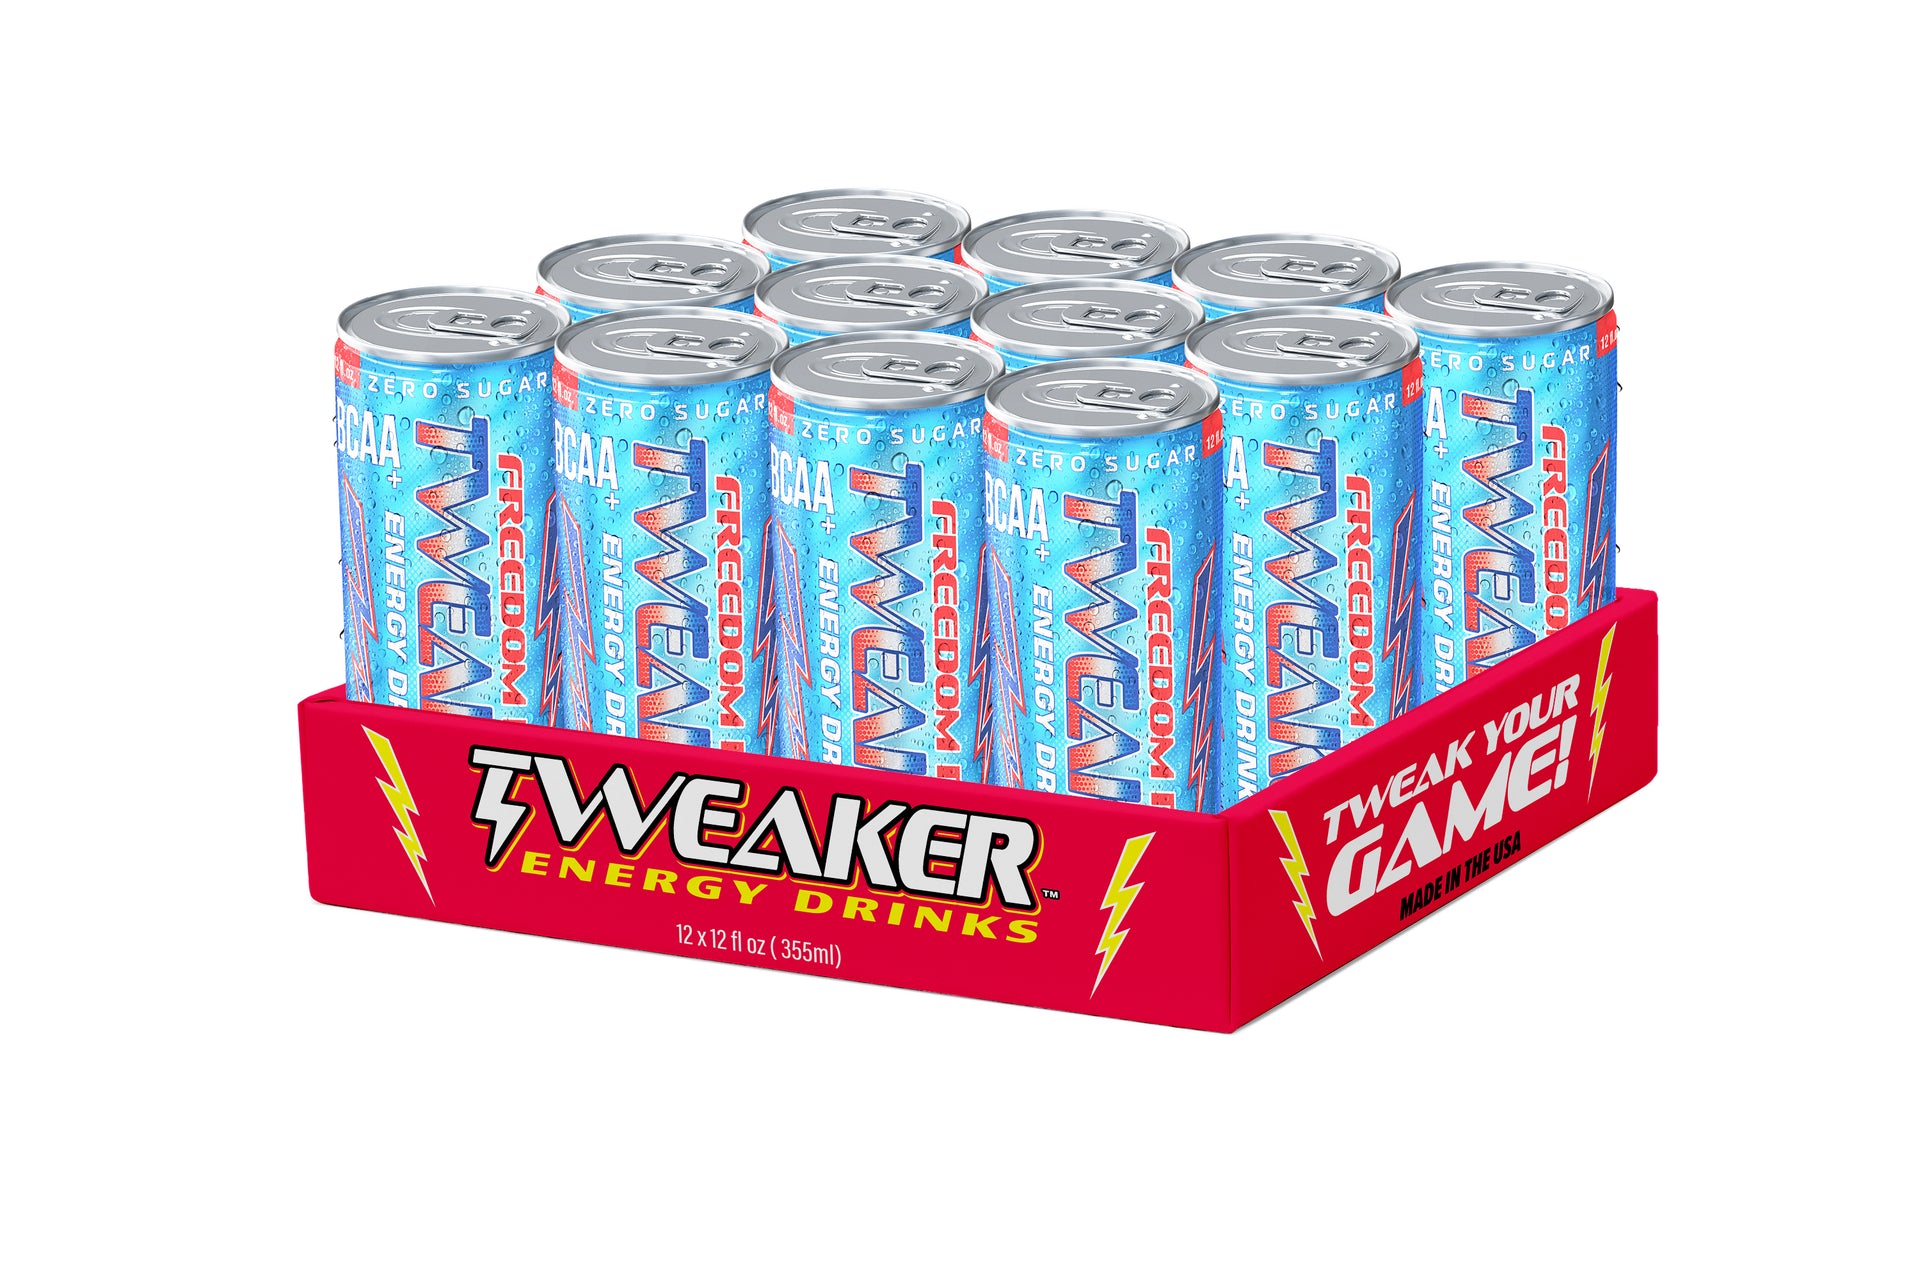 Image shows 12 pack case of Tweaker Energy Drink, Freedom Pop flavor